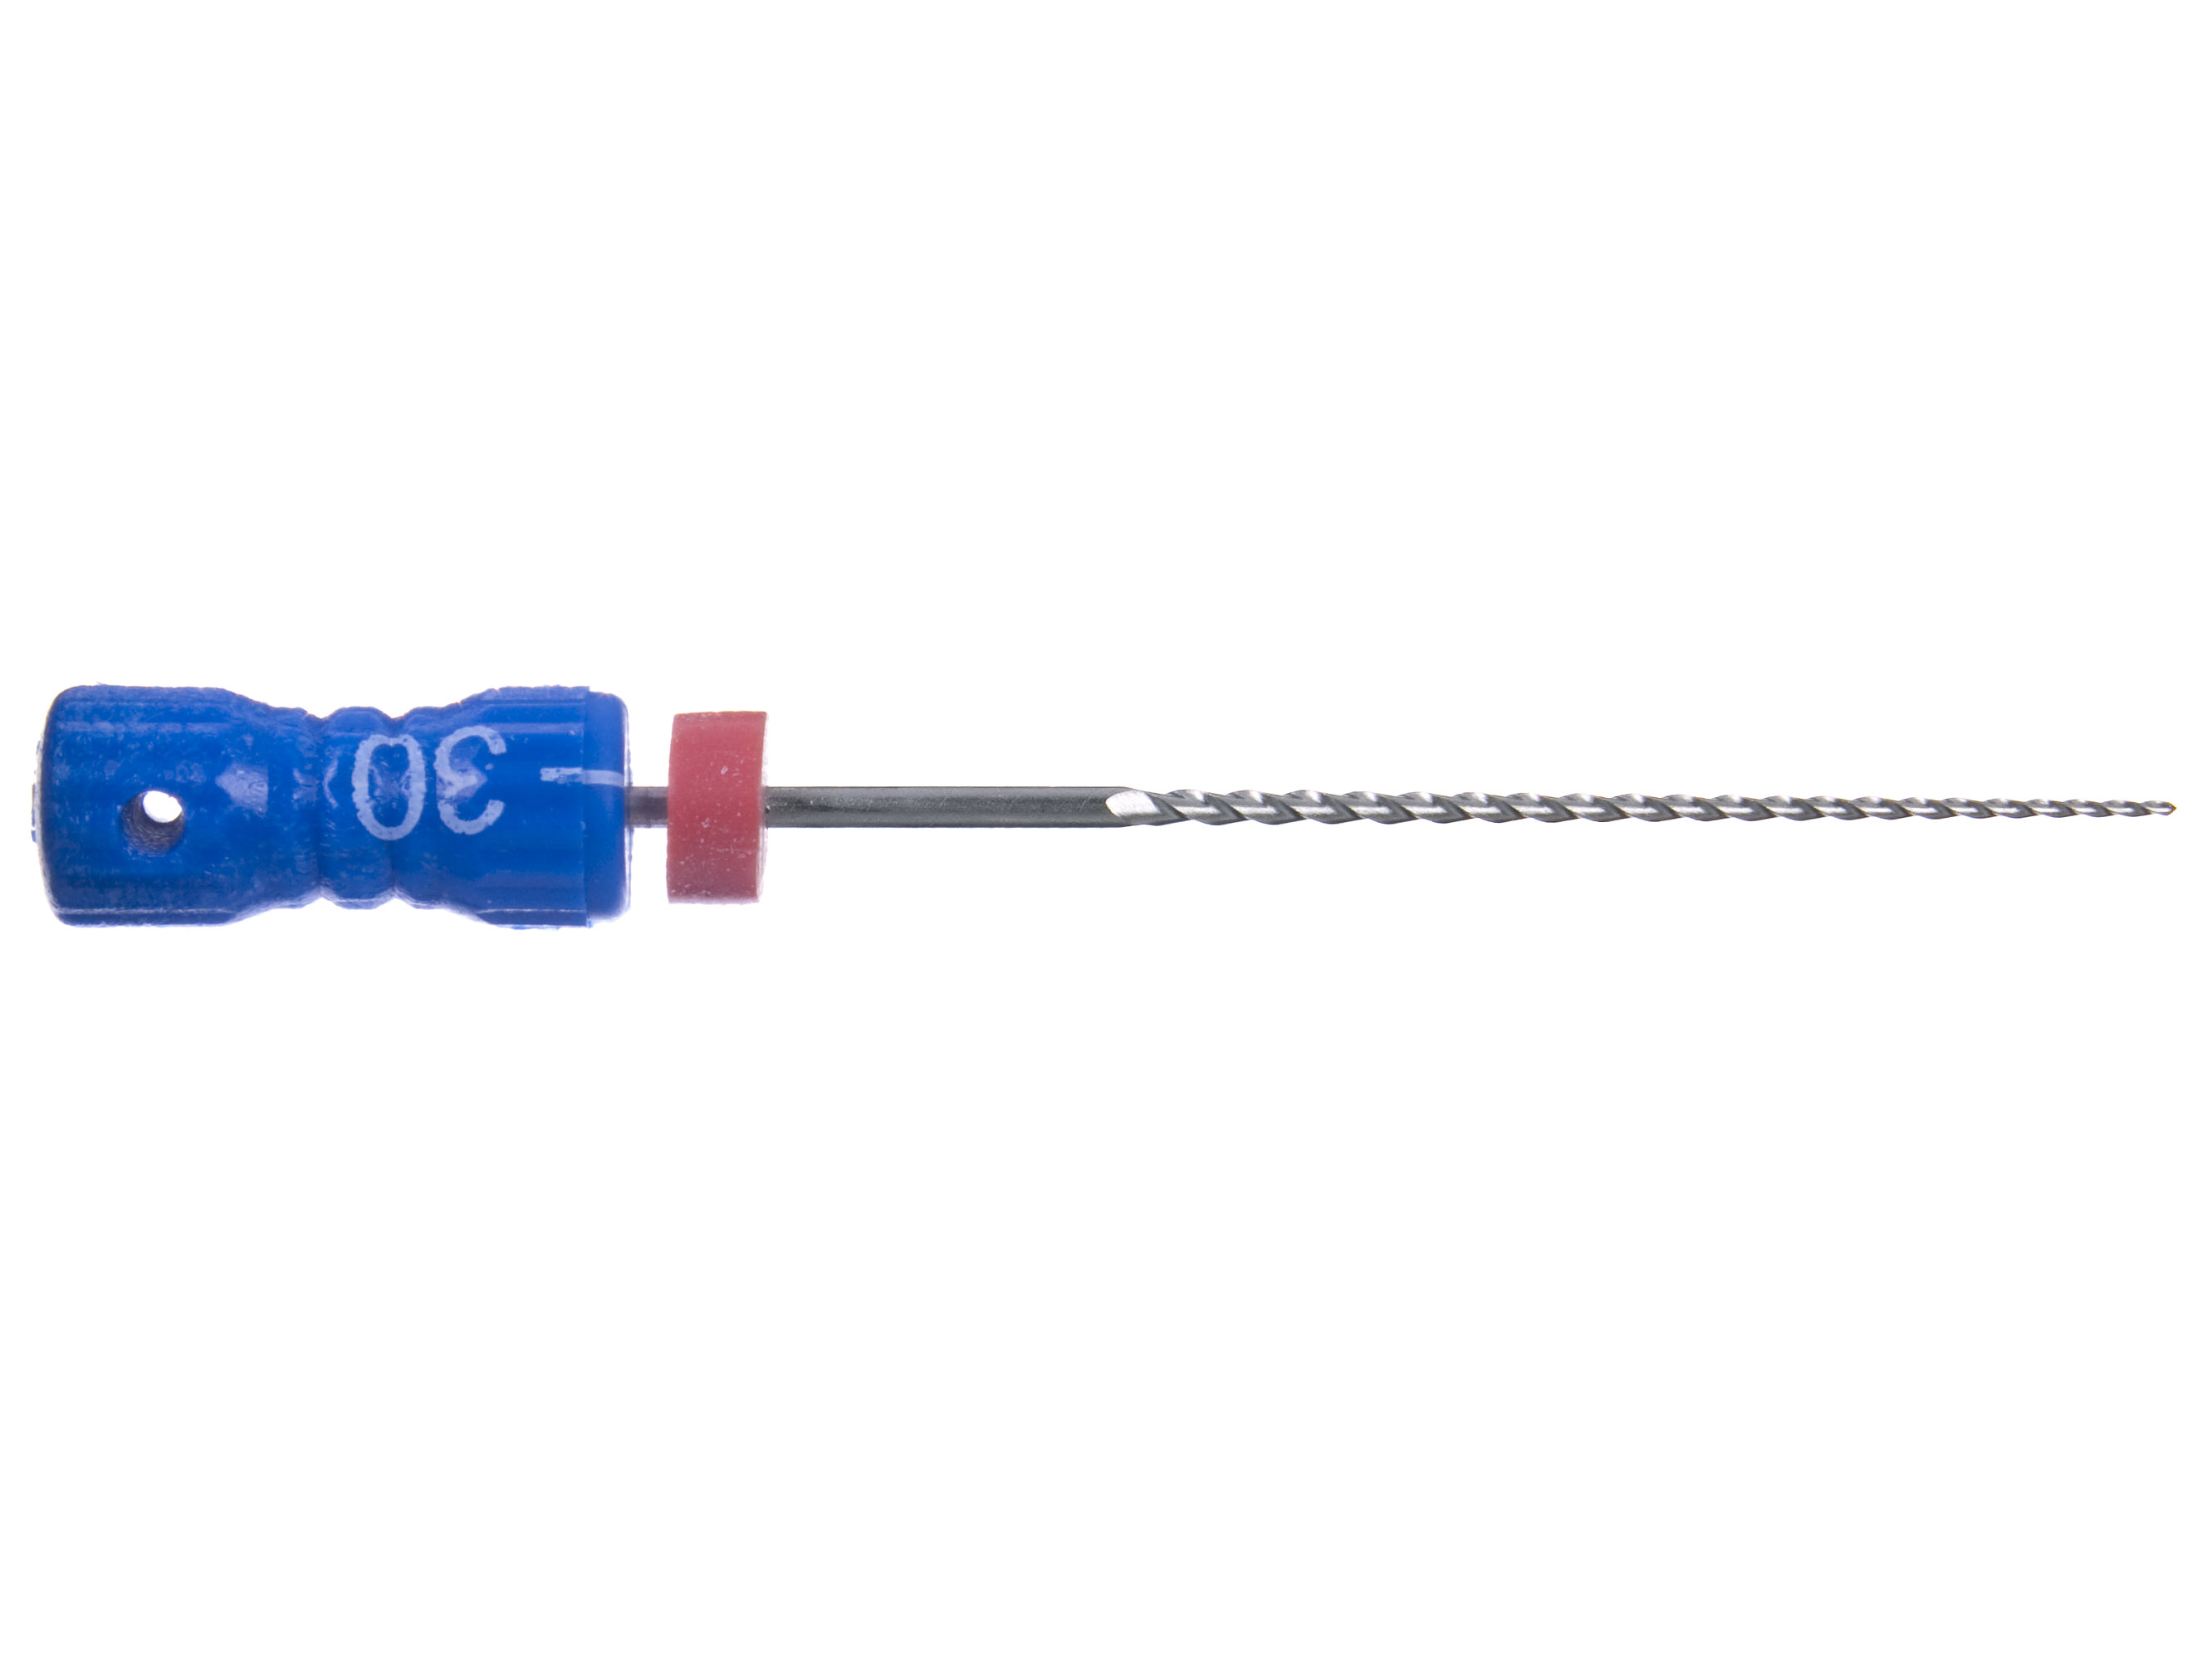 Helifile n30 L:21 mm Handle 09 ISO - инструменты эндодонтические